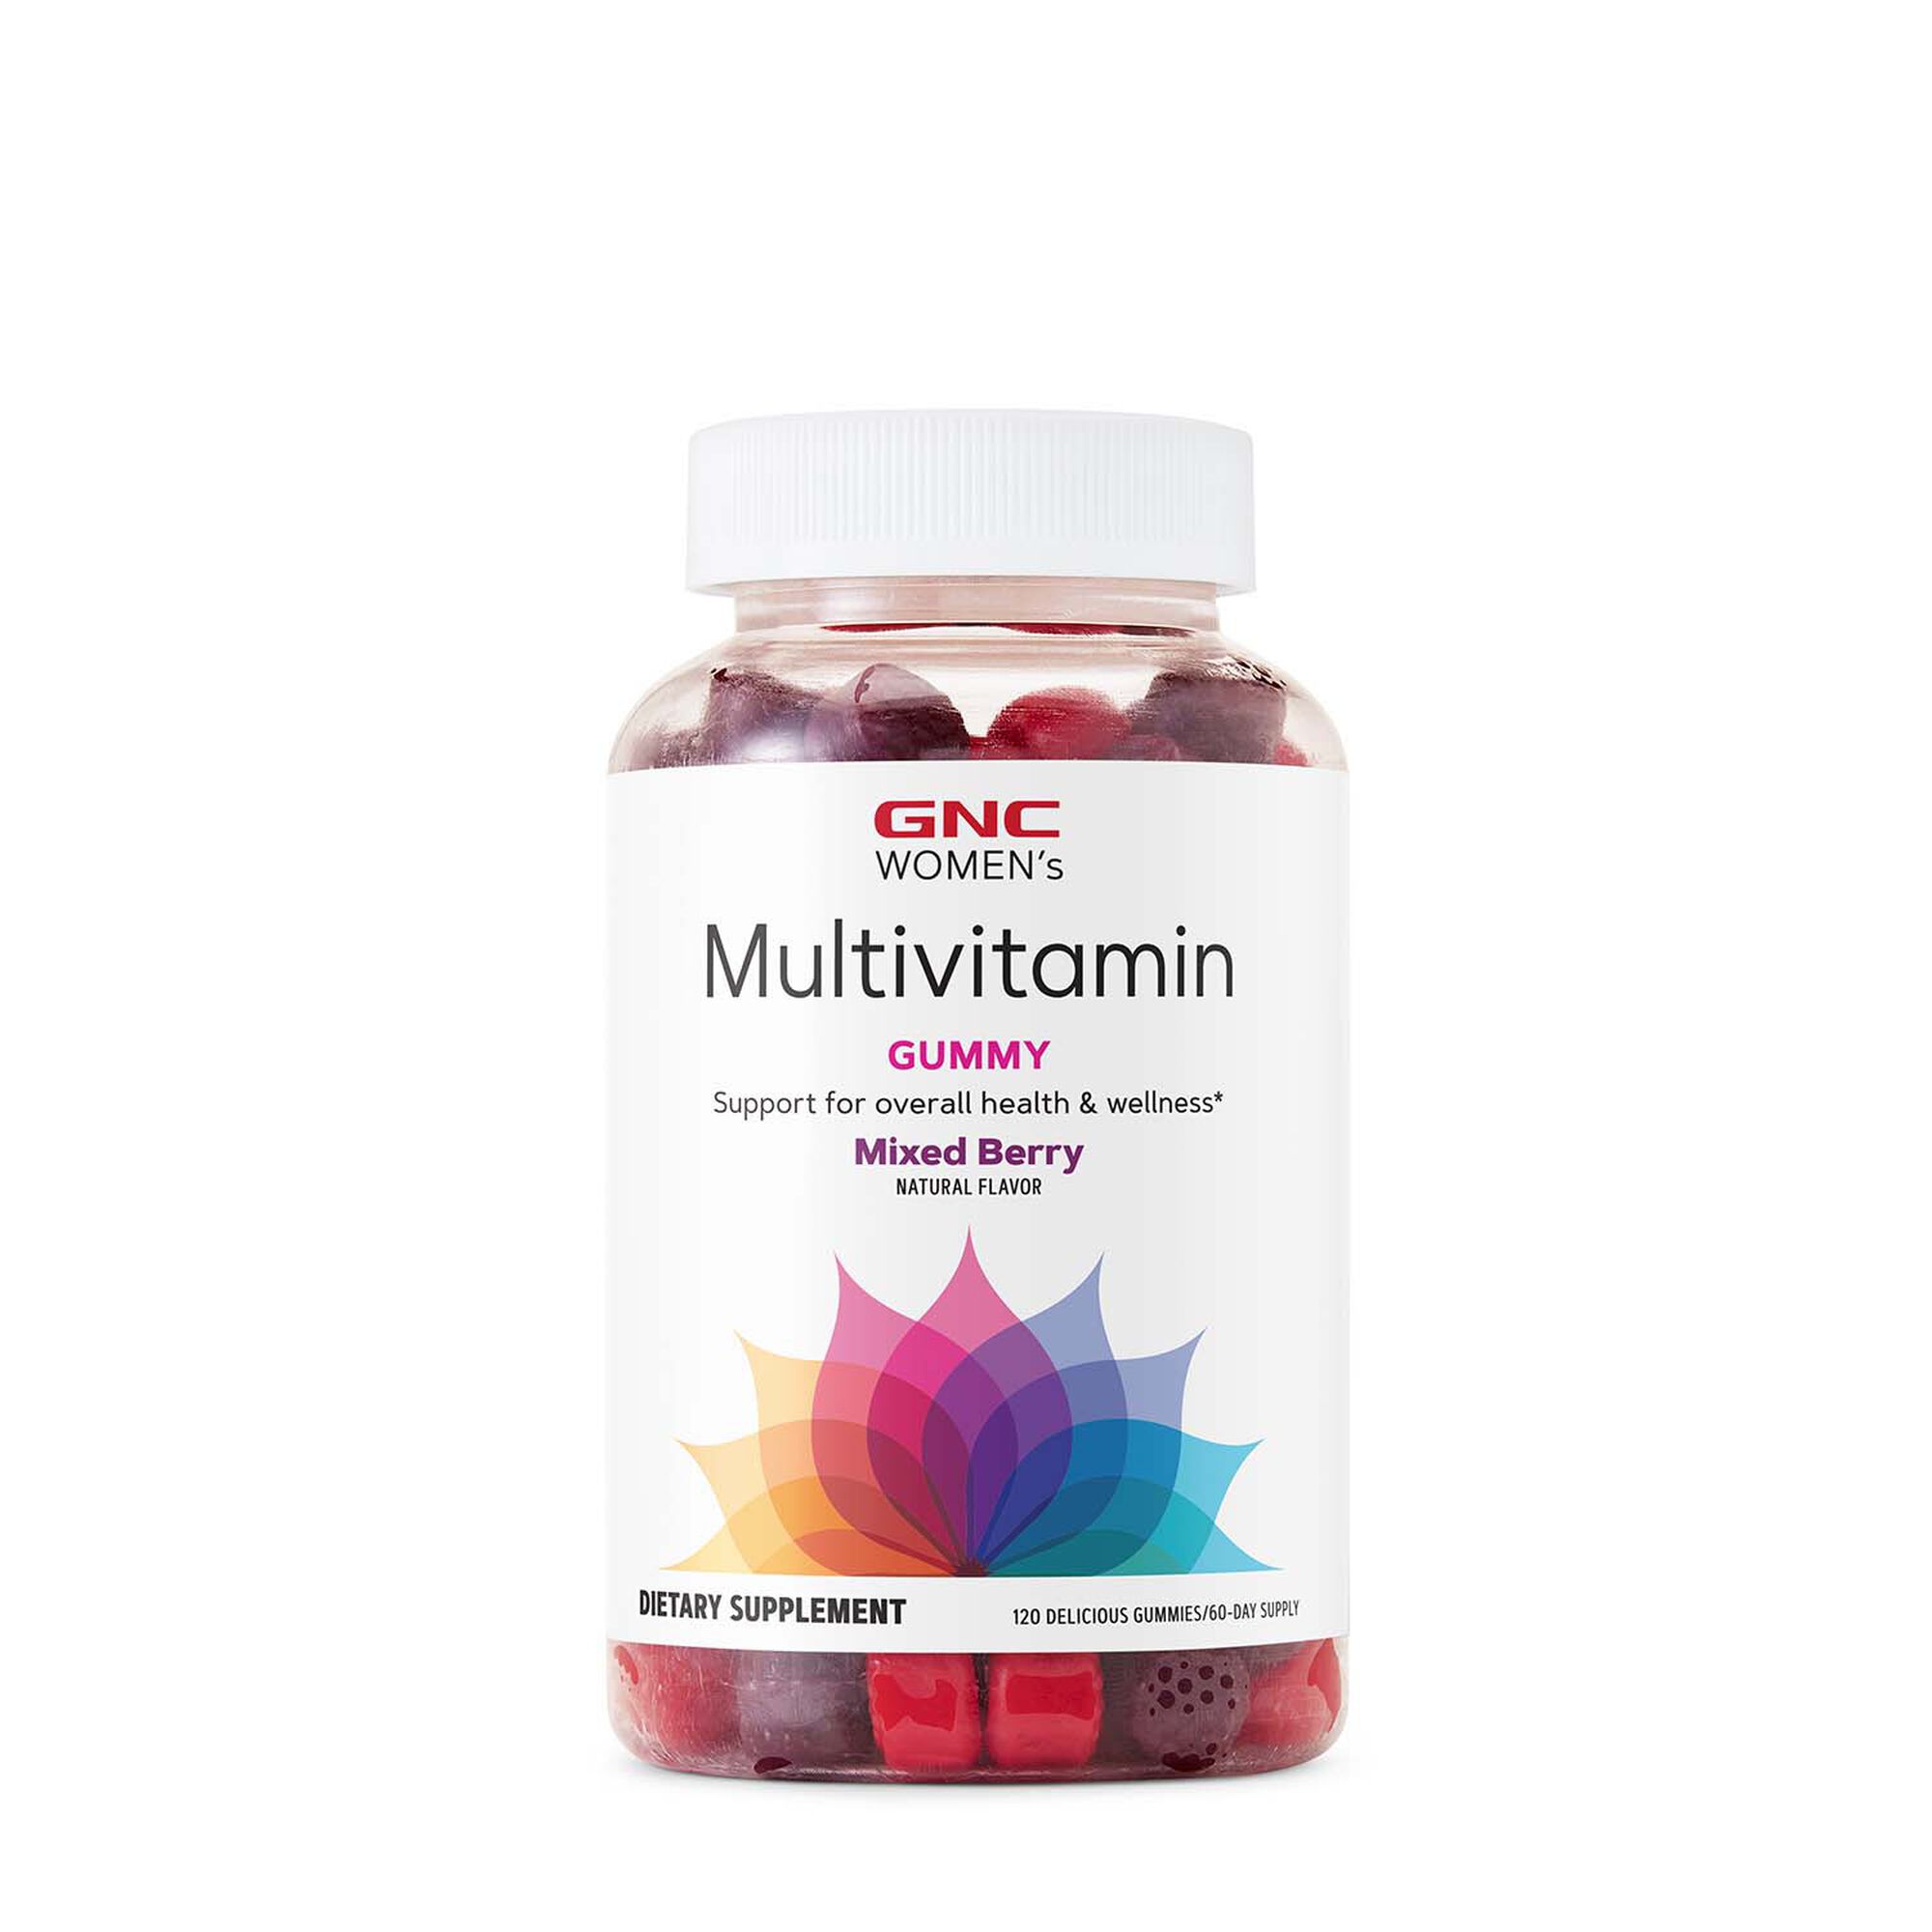 Multivitamin Gummy Mixed Berry Gnc